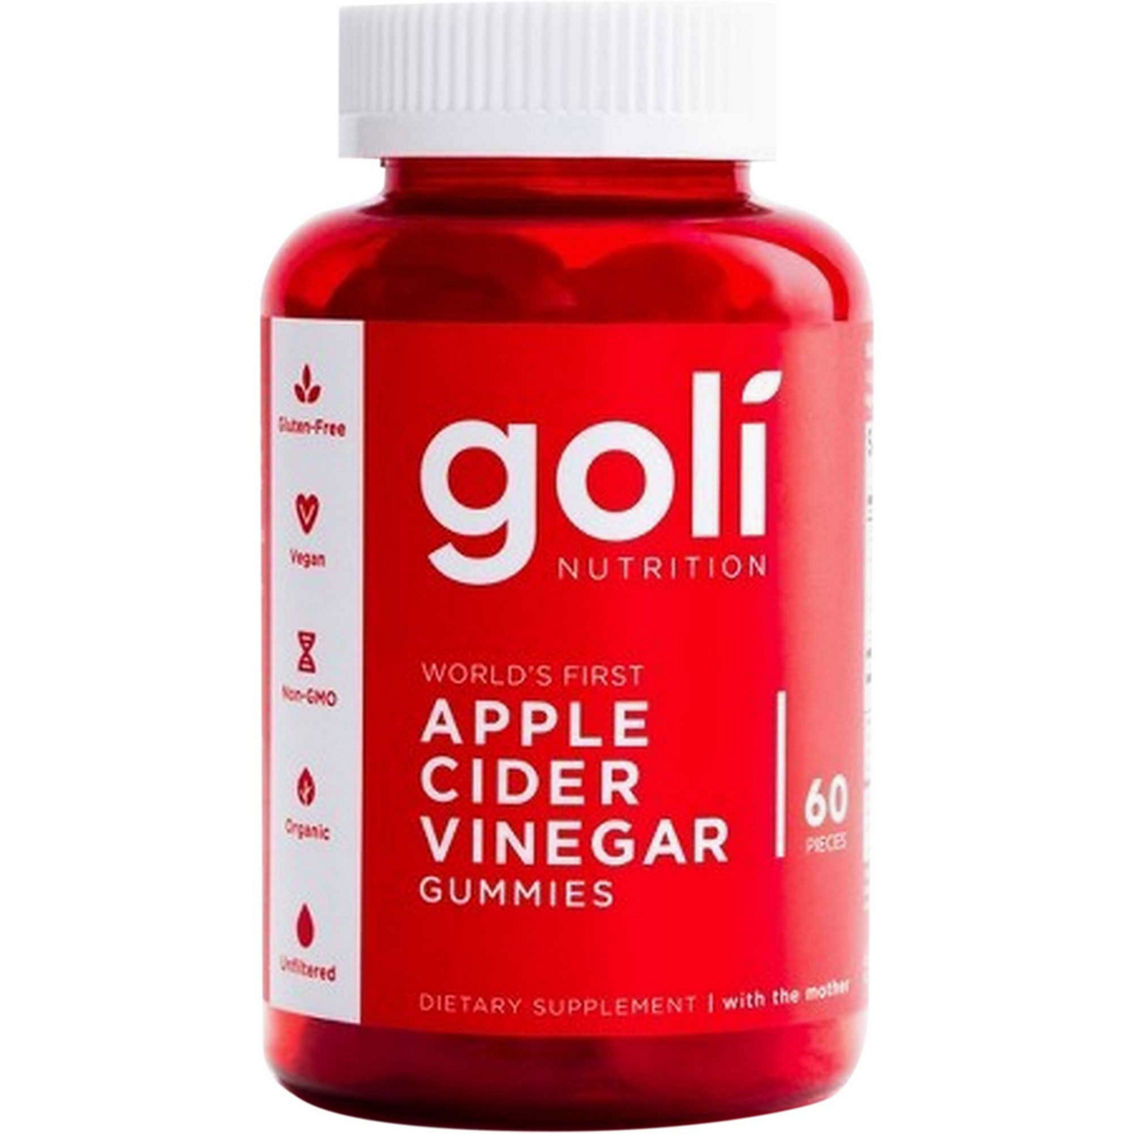 Goli Nutrition Apple Cider Vinegar Gummies 60 ct.